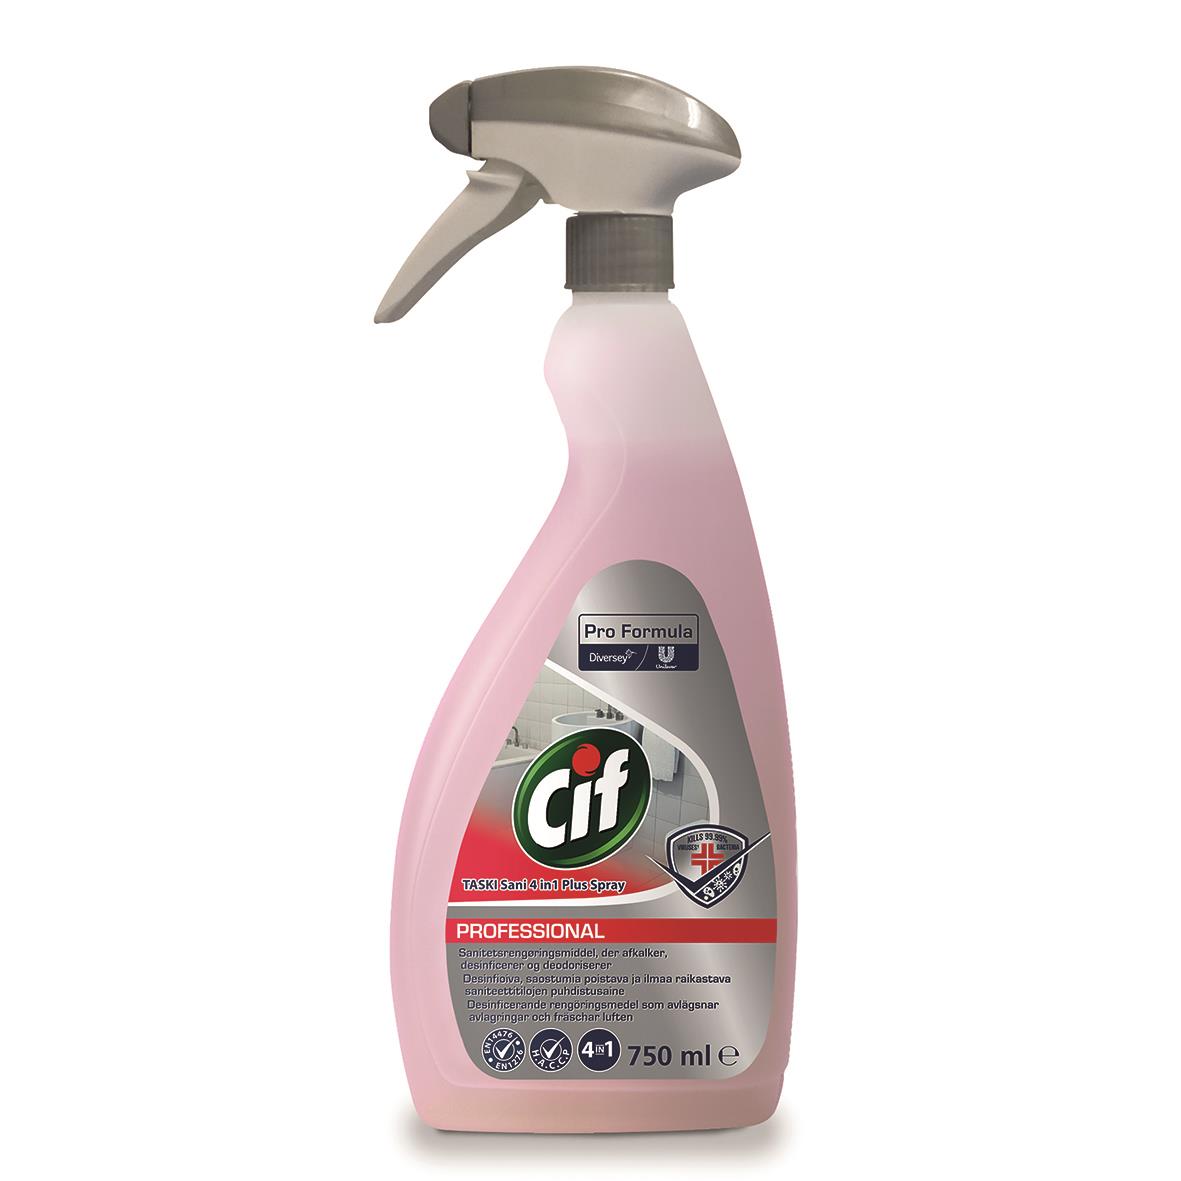 Sanitetsrent Cif Professional 4in1 Badrum Spray 750ml